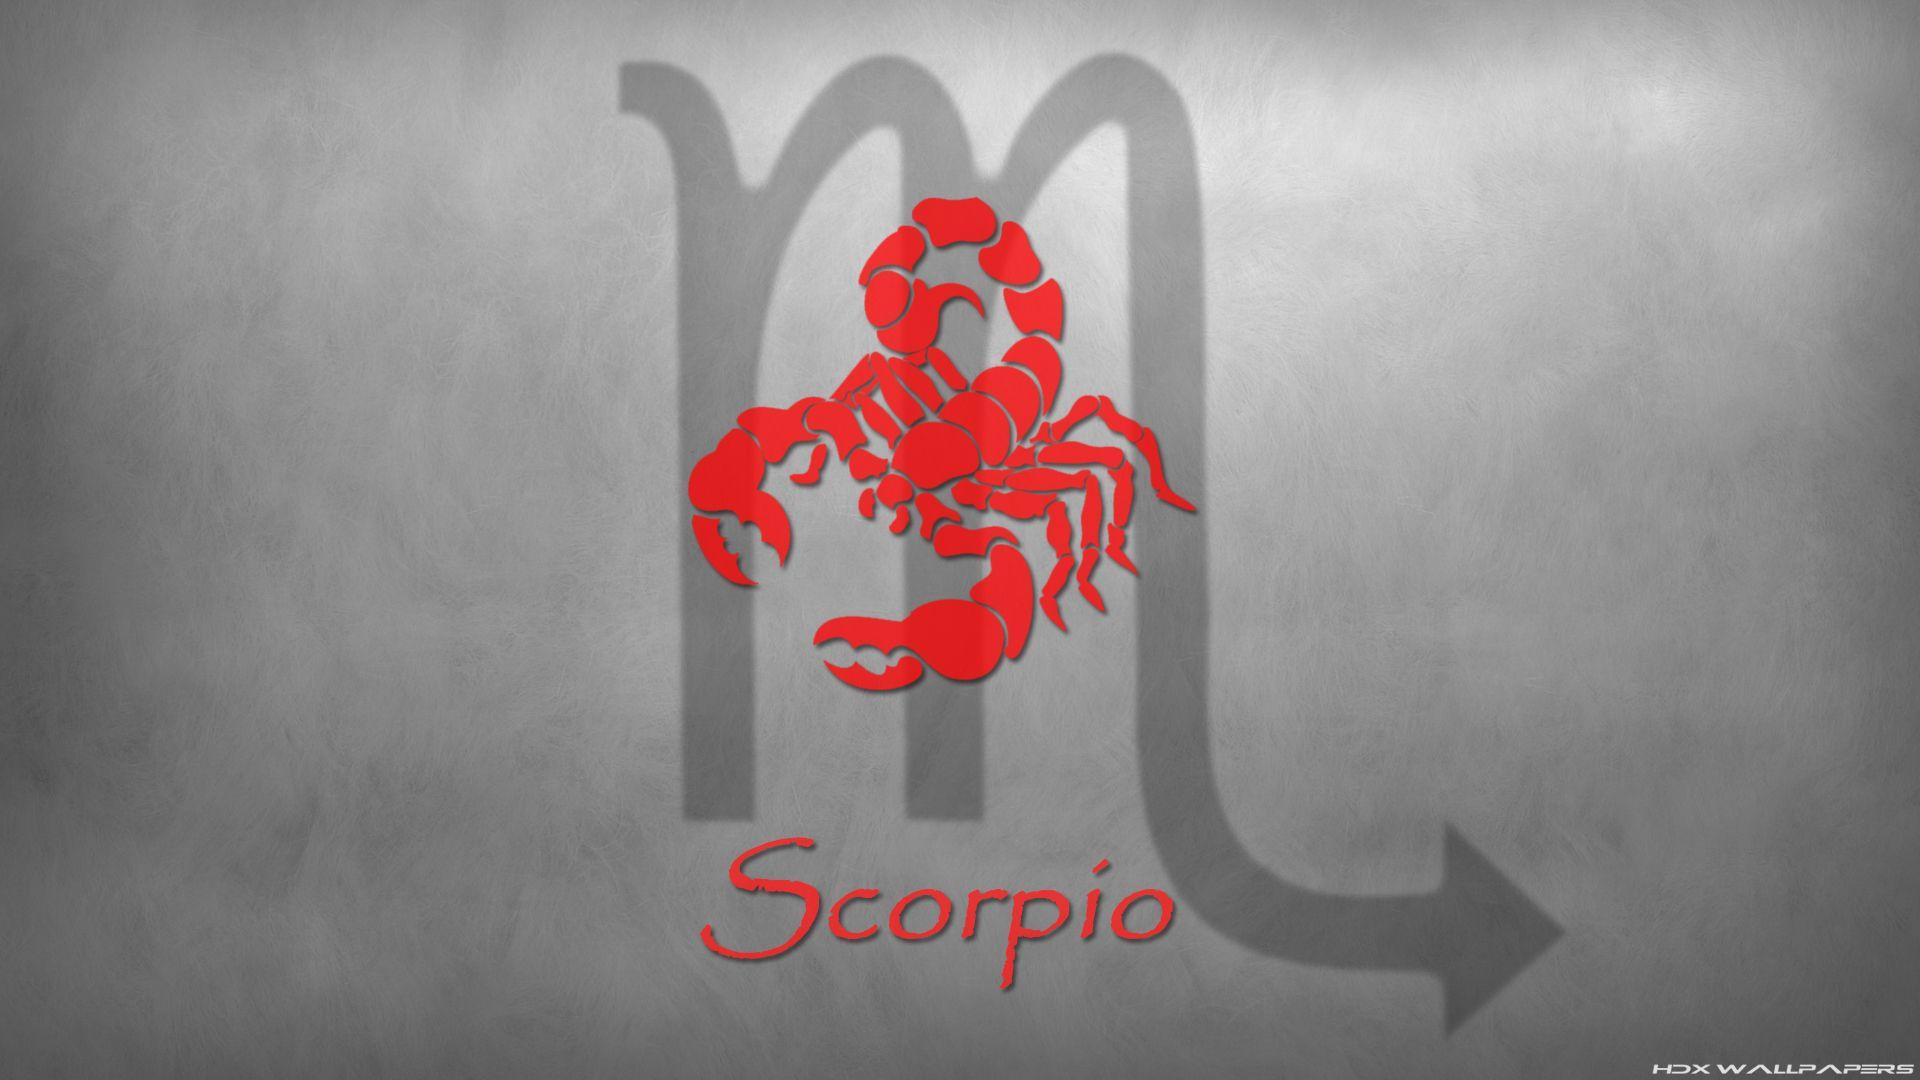 Sign Scorpio wallpaper and image, picture, photo